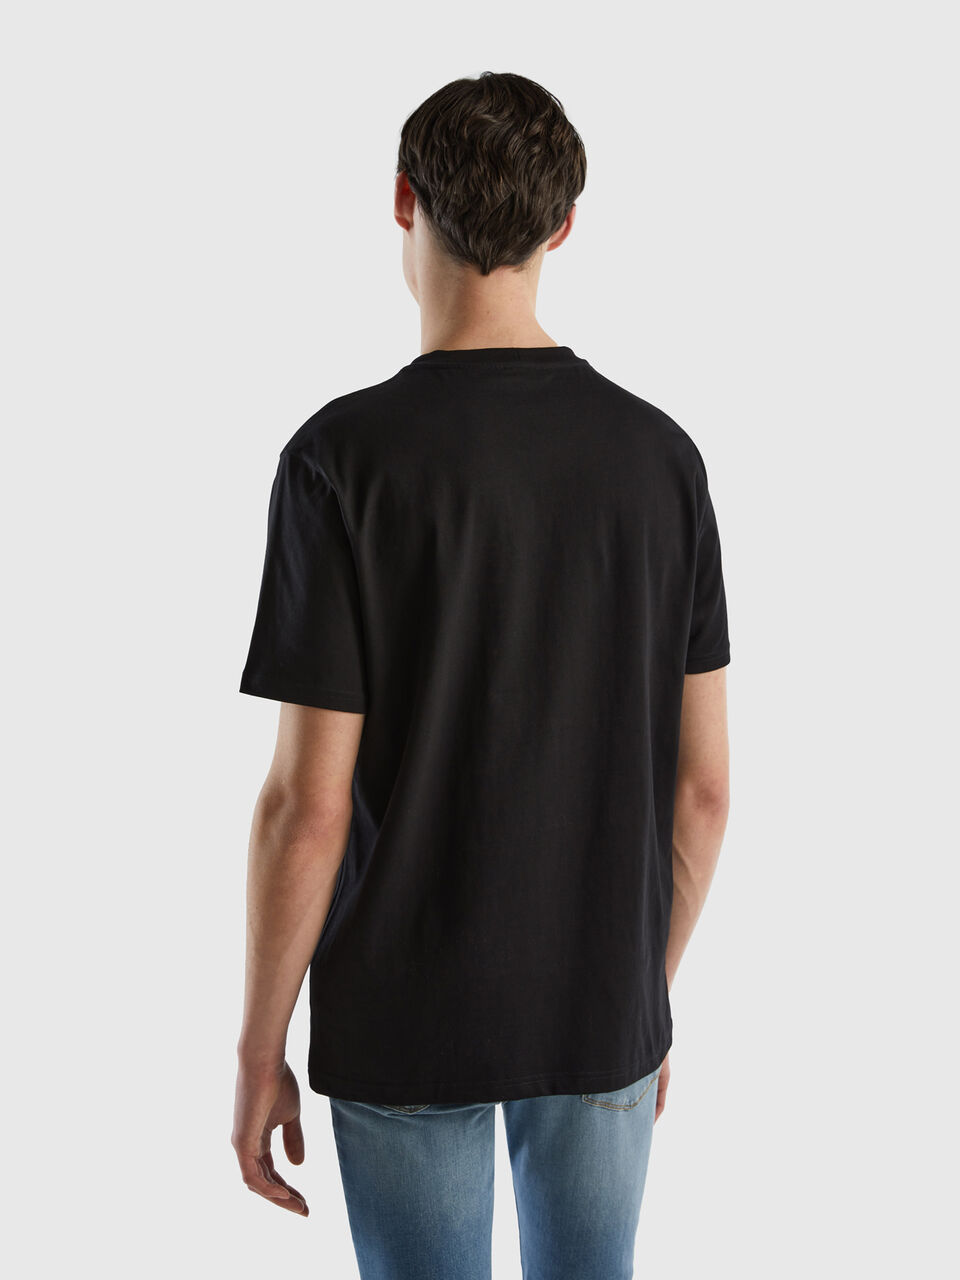 | t-shirt Benetton 100% basic cotton Black organic -